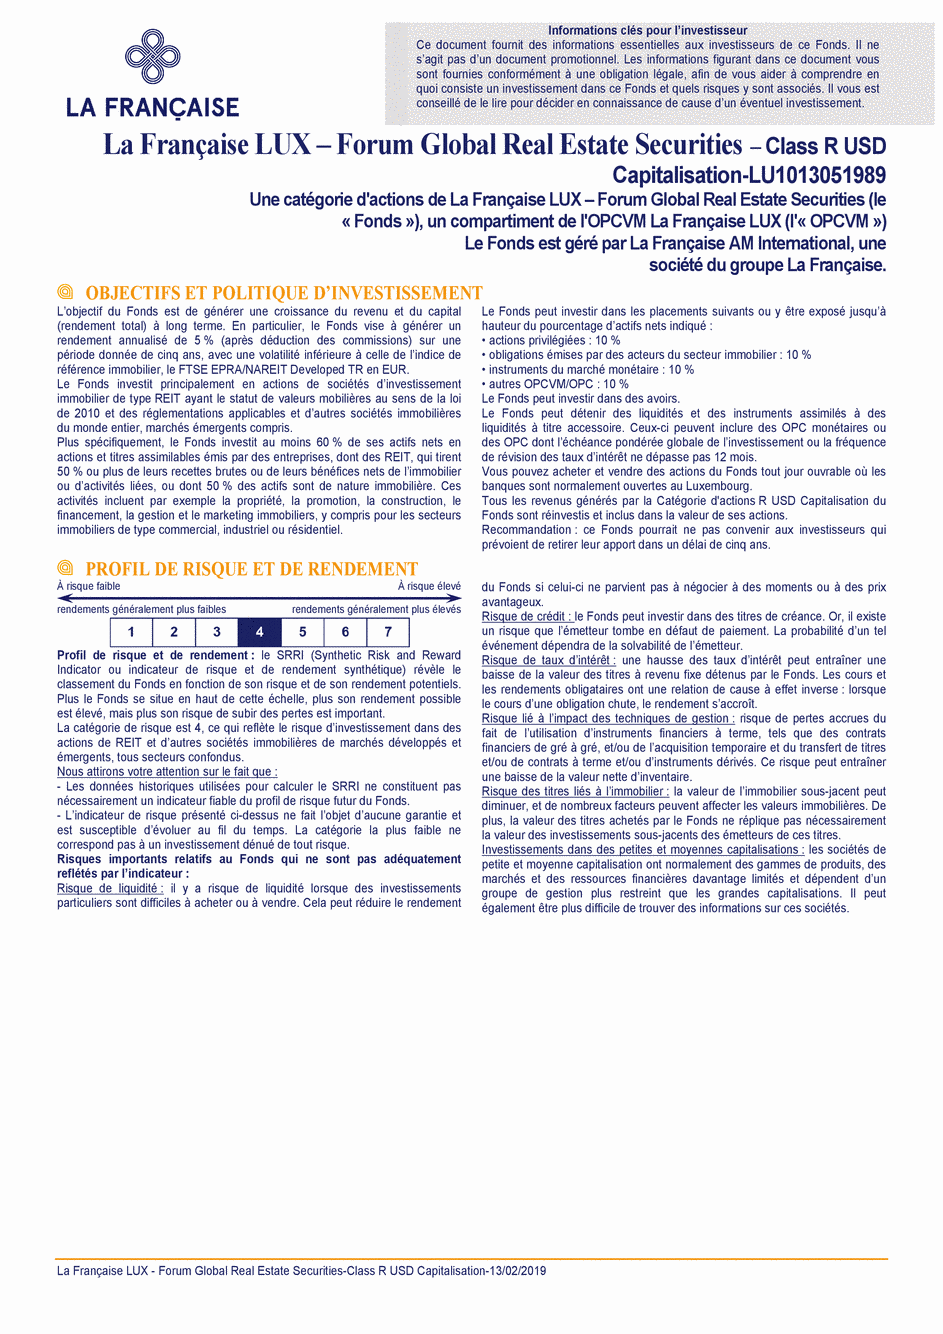 DICI La Française LUX - Forum Global Real Estate Securities - R (C) USD - 13/02/2019 - French